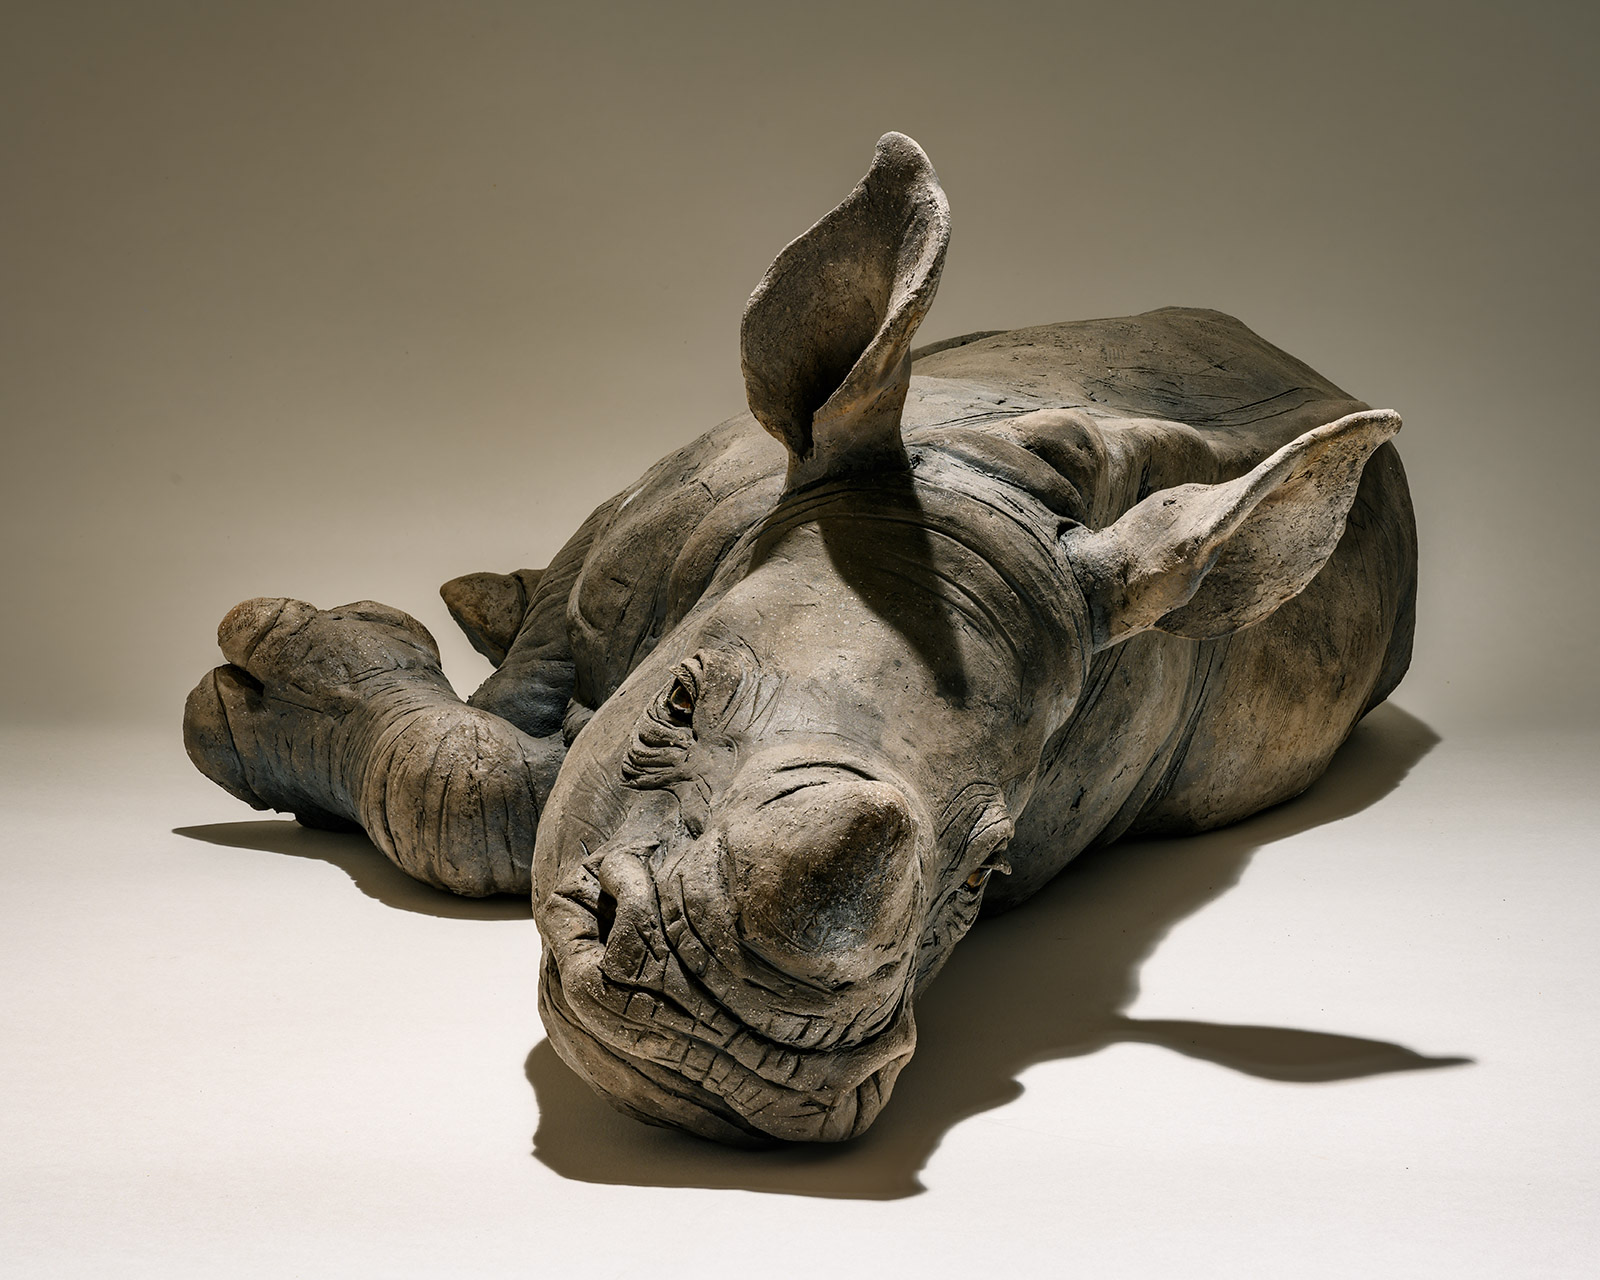 White Rhino Sculpture